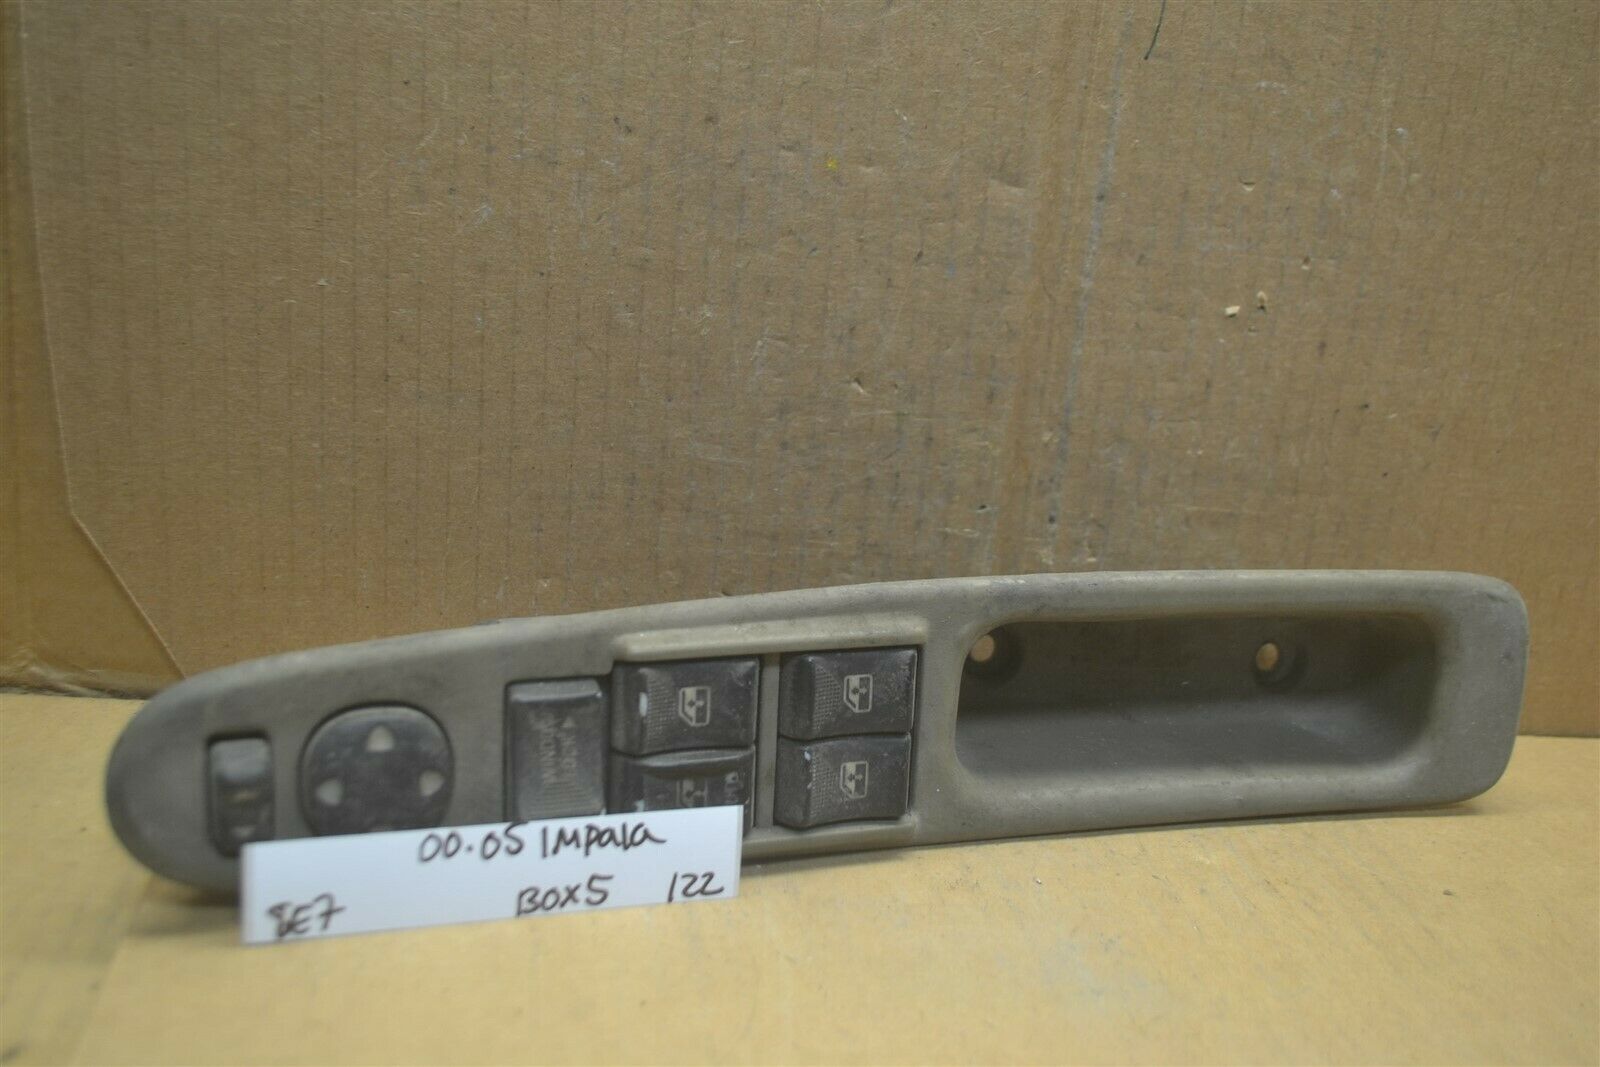 00-05 Chevrolet Impala Master Switch OEM Door Window 10435215 Lock 122-8e7 bx5  - $9.99